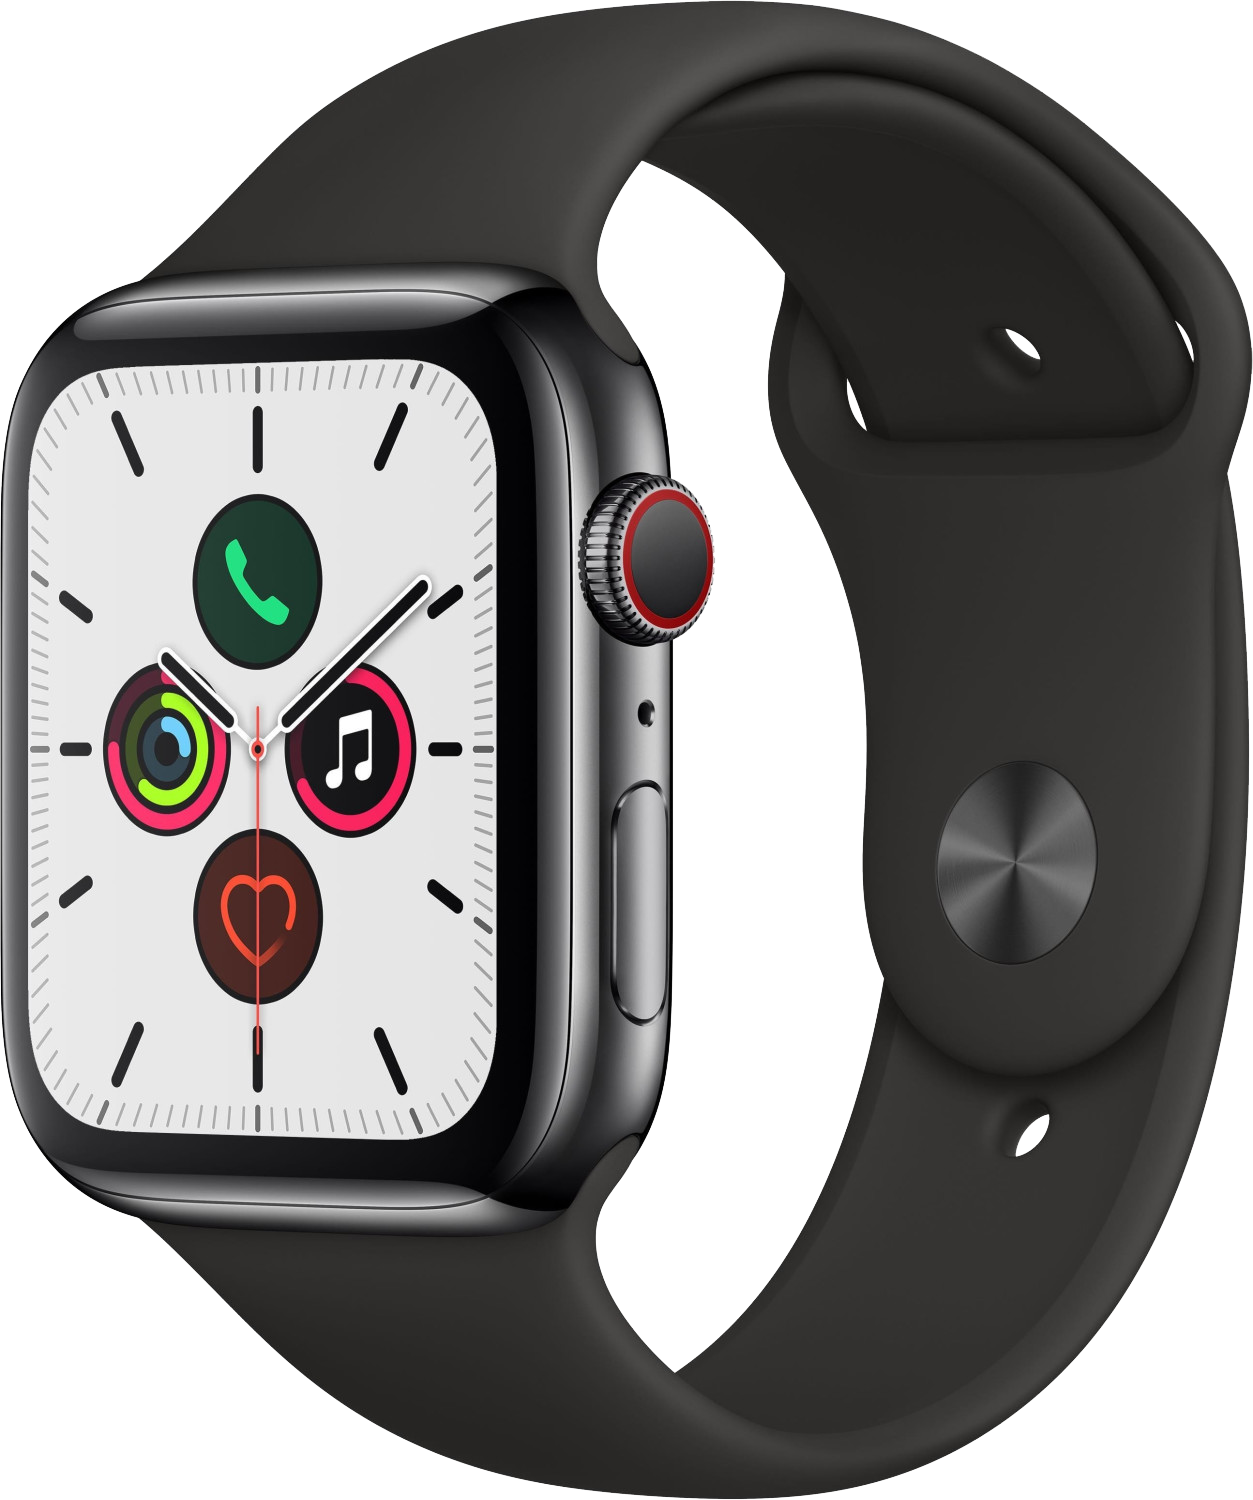 Apple Watch 5 LTE grau Edelstah 44mm armband schwarz MWWK2 - Ohne Vertrag